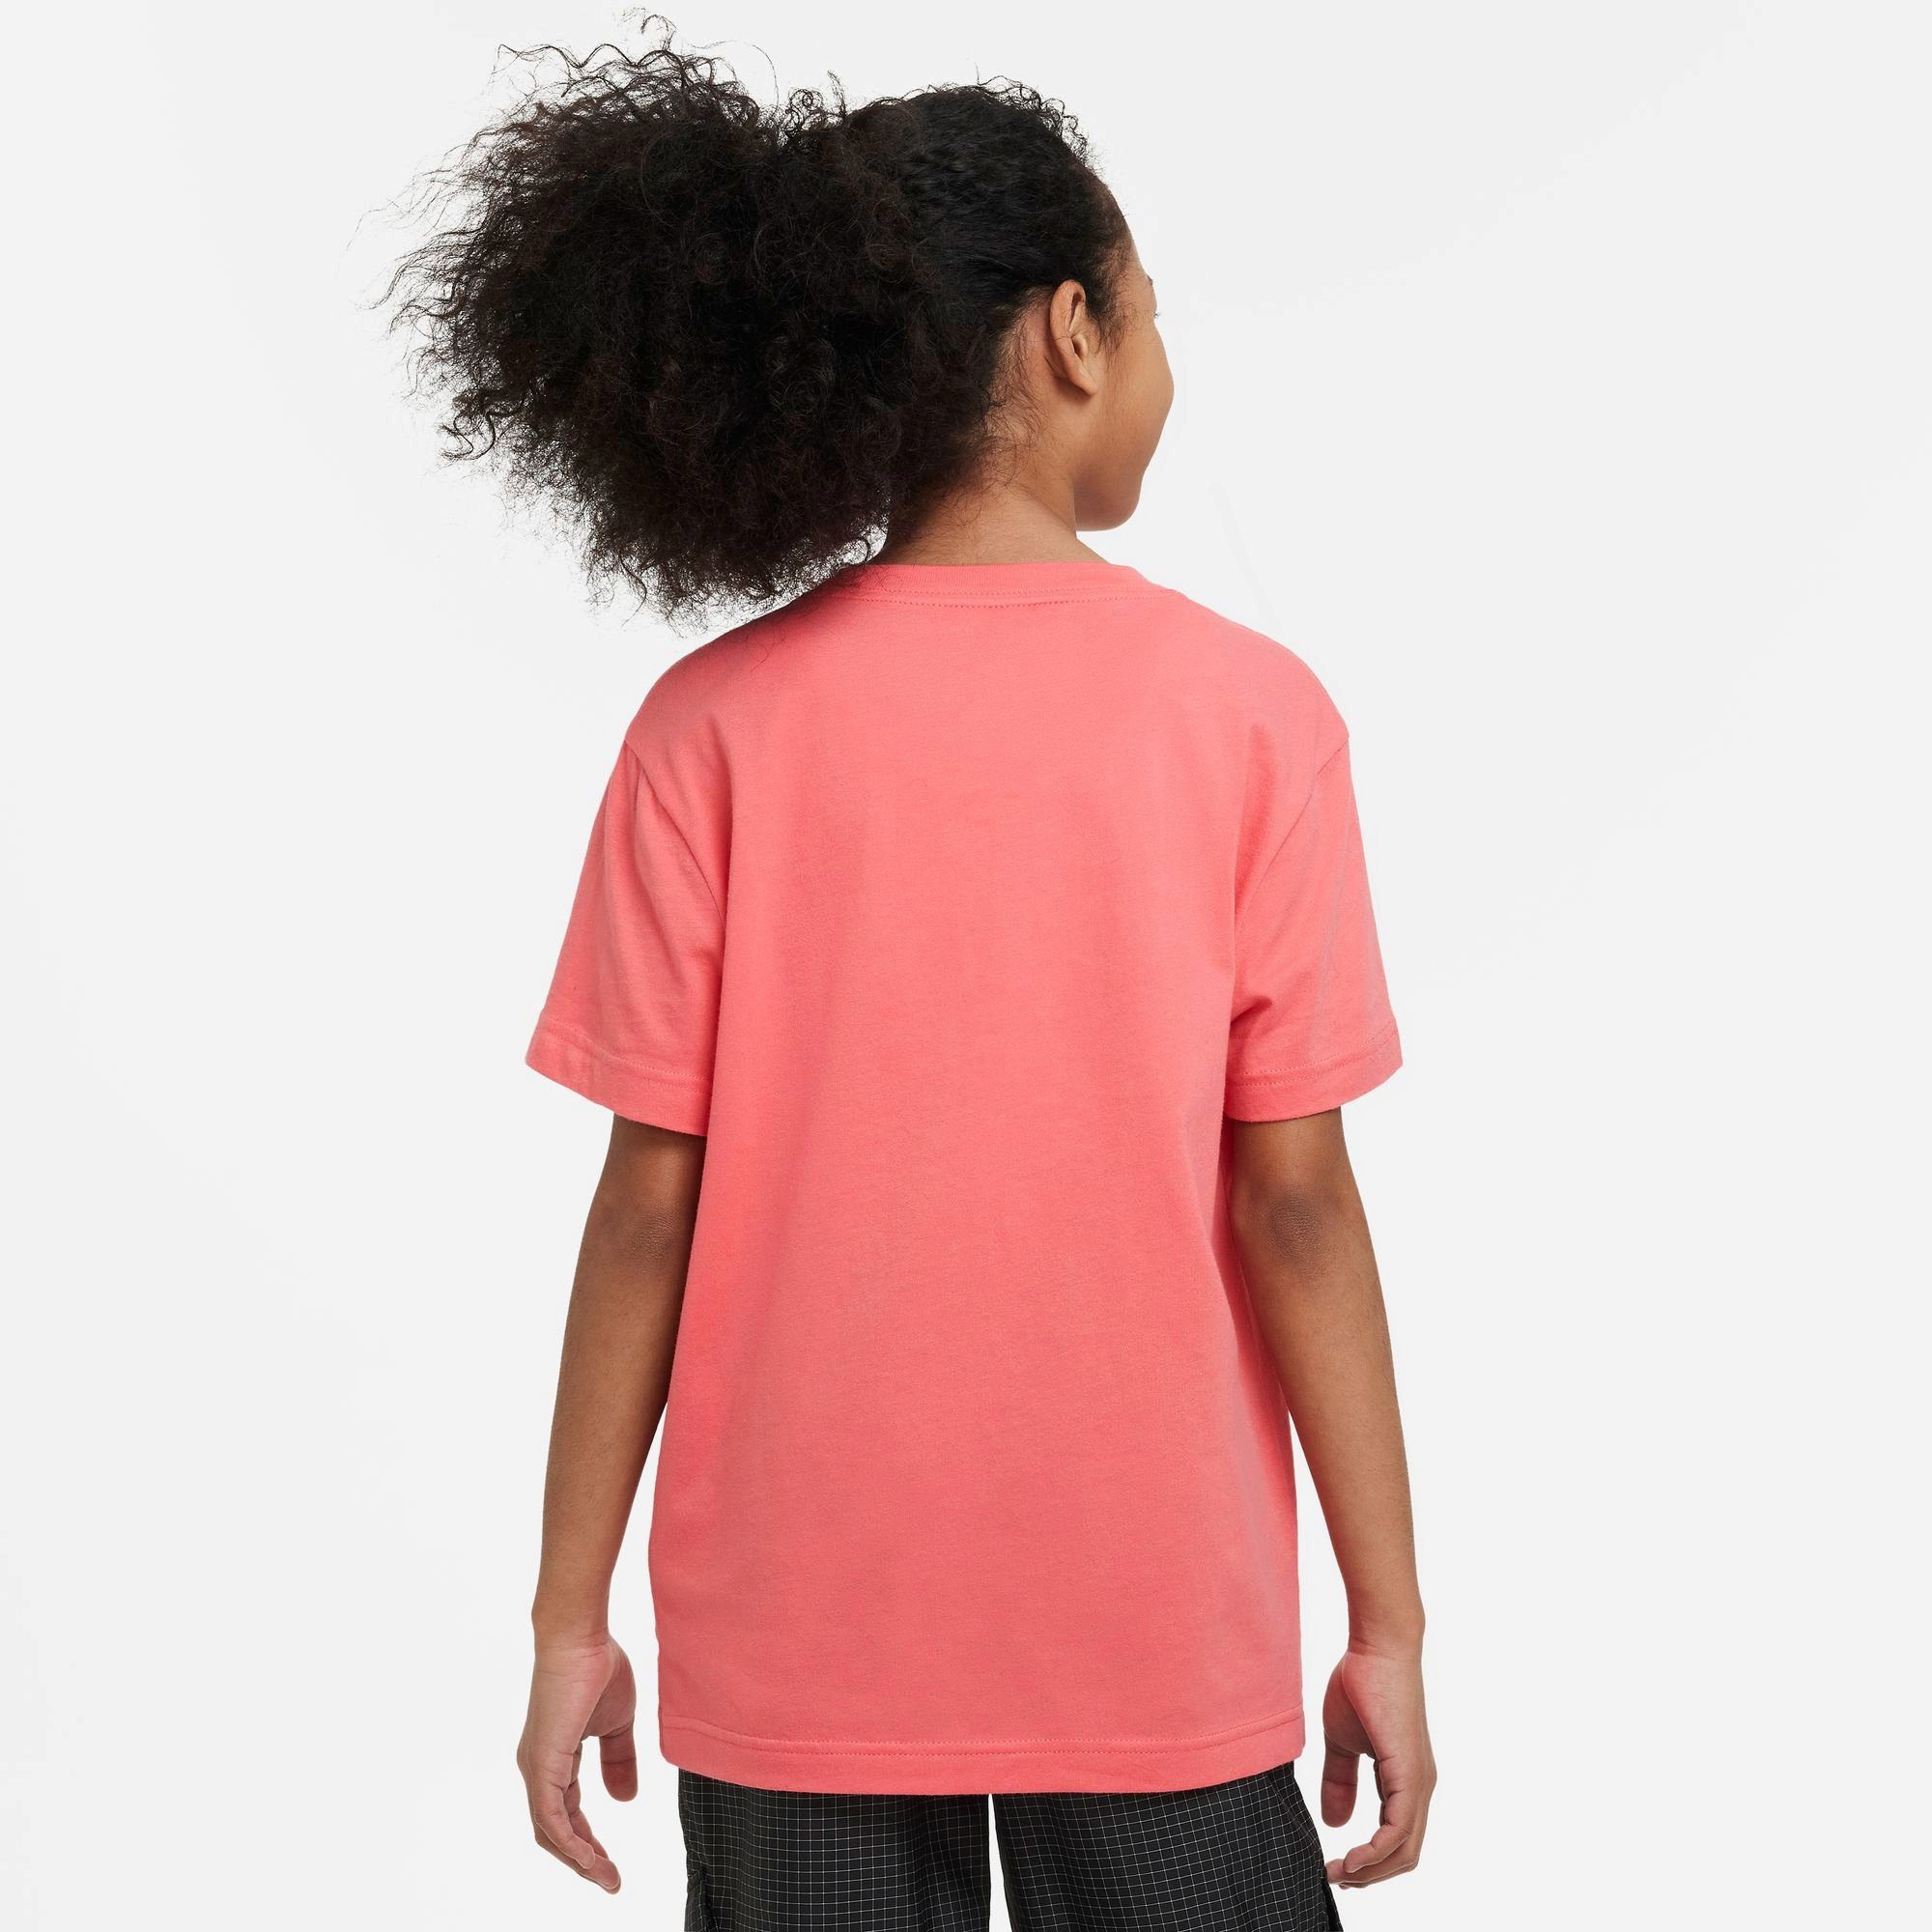 BIG (GIRLS) Sportswear T-Shirt KIDS' orange T-SHIRT Nike